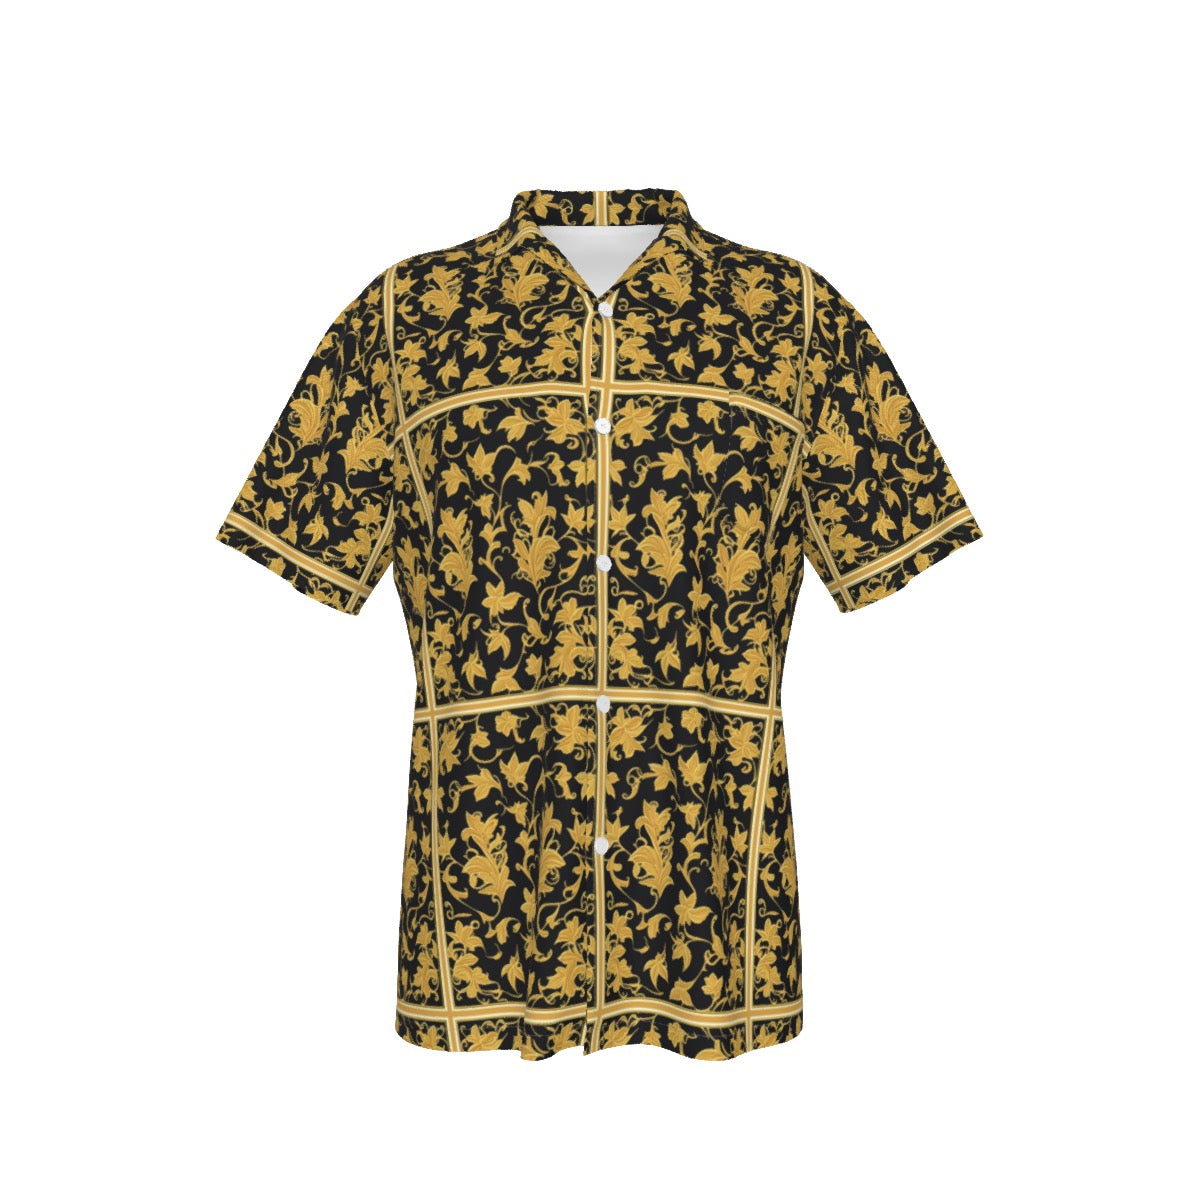 Gold on Black -- Men's Hawaiian Shirt With Pocket